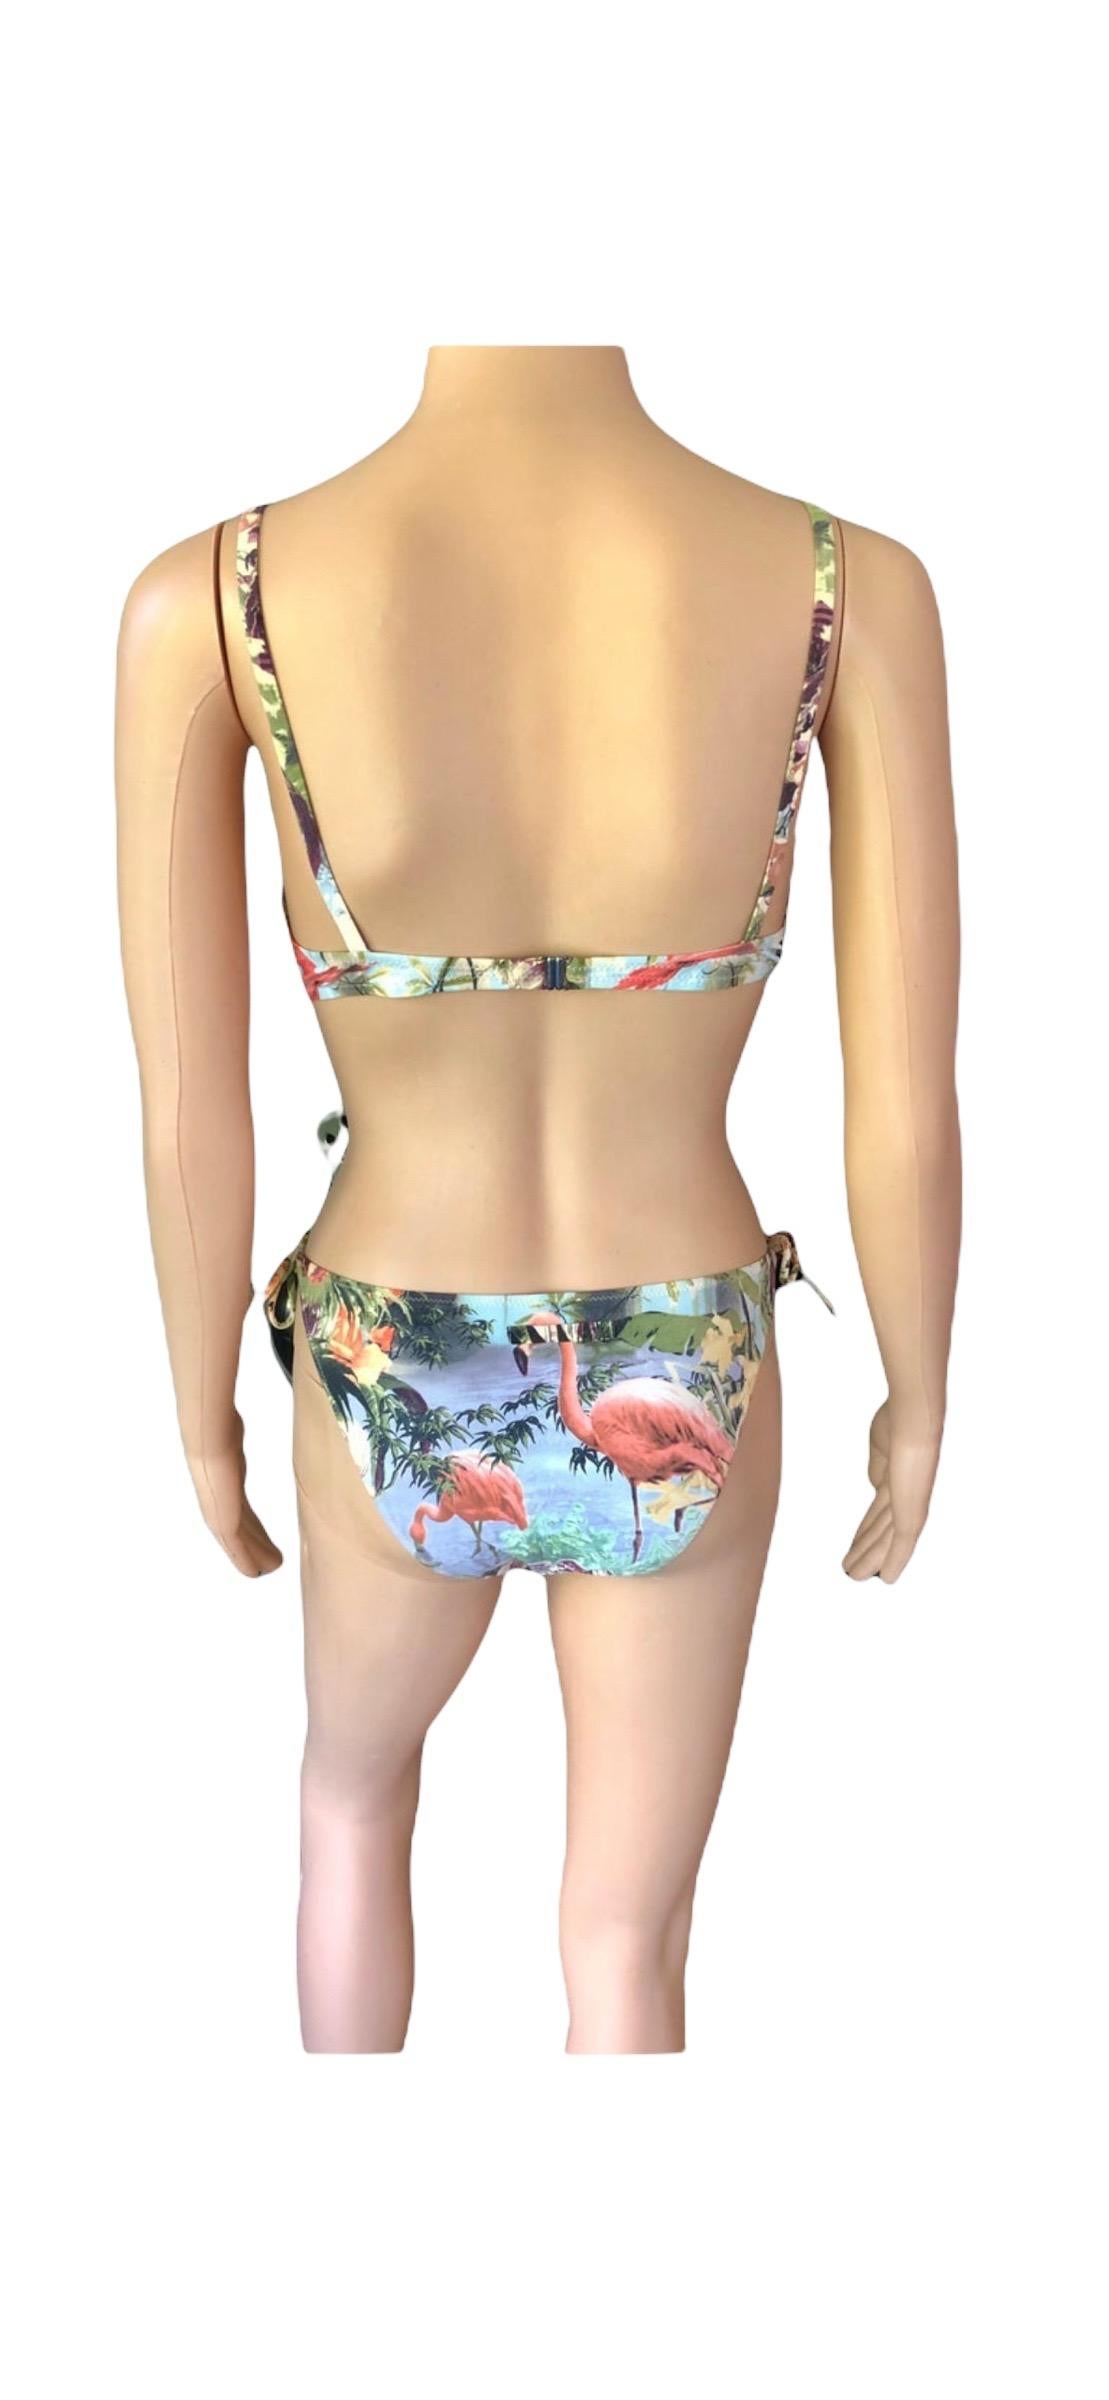 Jean Paul Gaultier Soleil S/S 1999 Flamingo Tropical Bikini Swimsuit 2 Piece Set For Sale 3